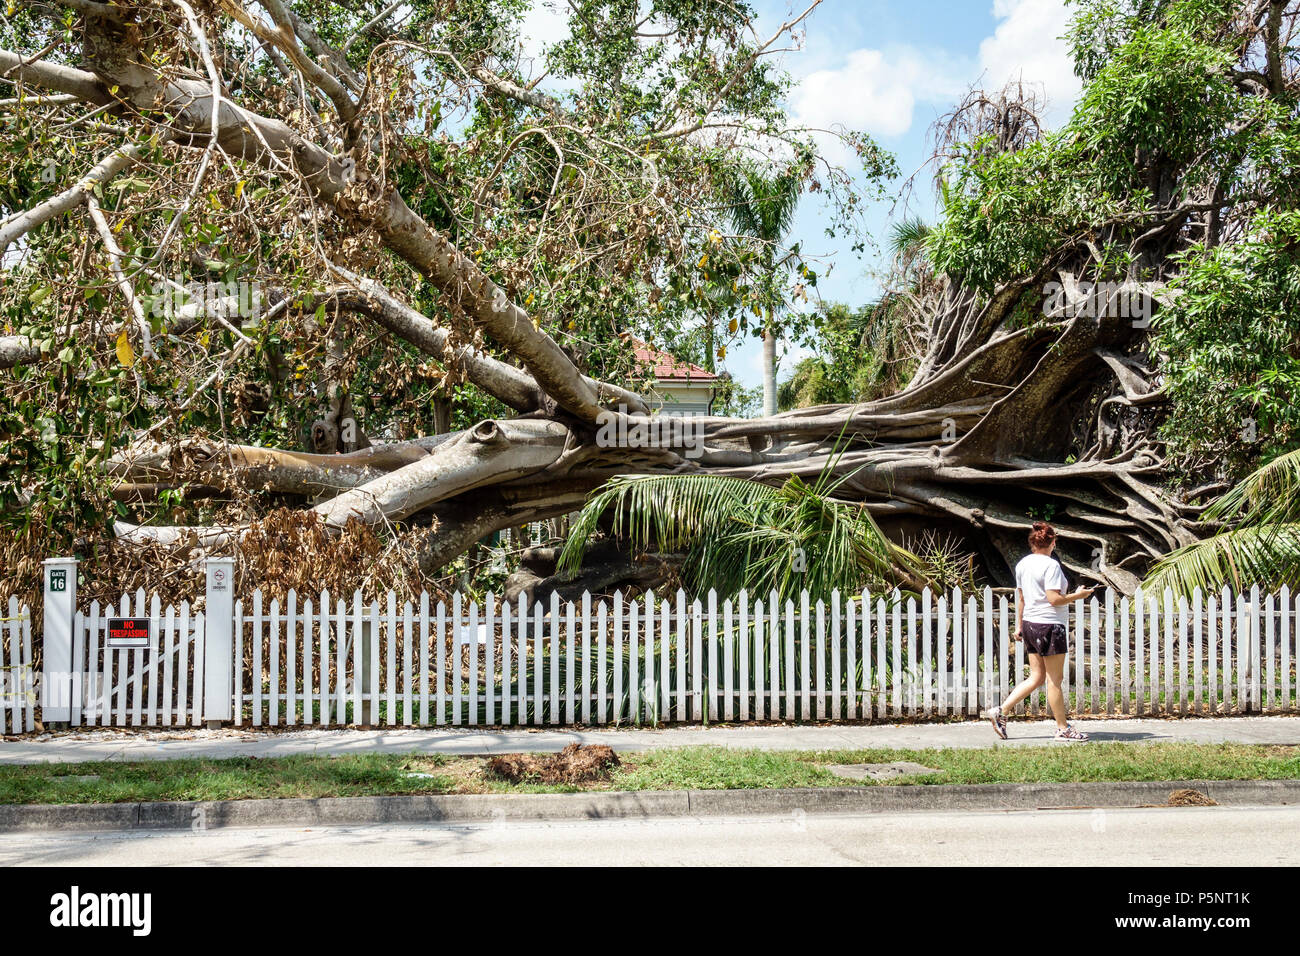 Fort Ft. Myers Florida,McGregor Boulevard,Edison & Ford Winter Estates,fallen giant Mysore fig Ficus myorensis tree,exposed root system,Hurricane Irma Stock Photo